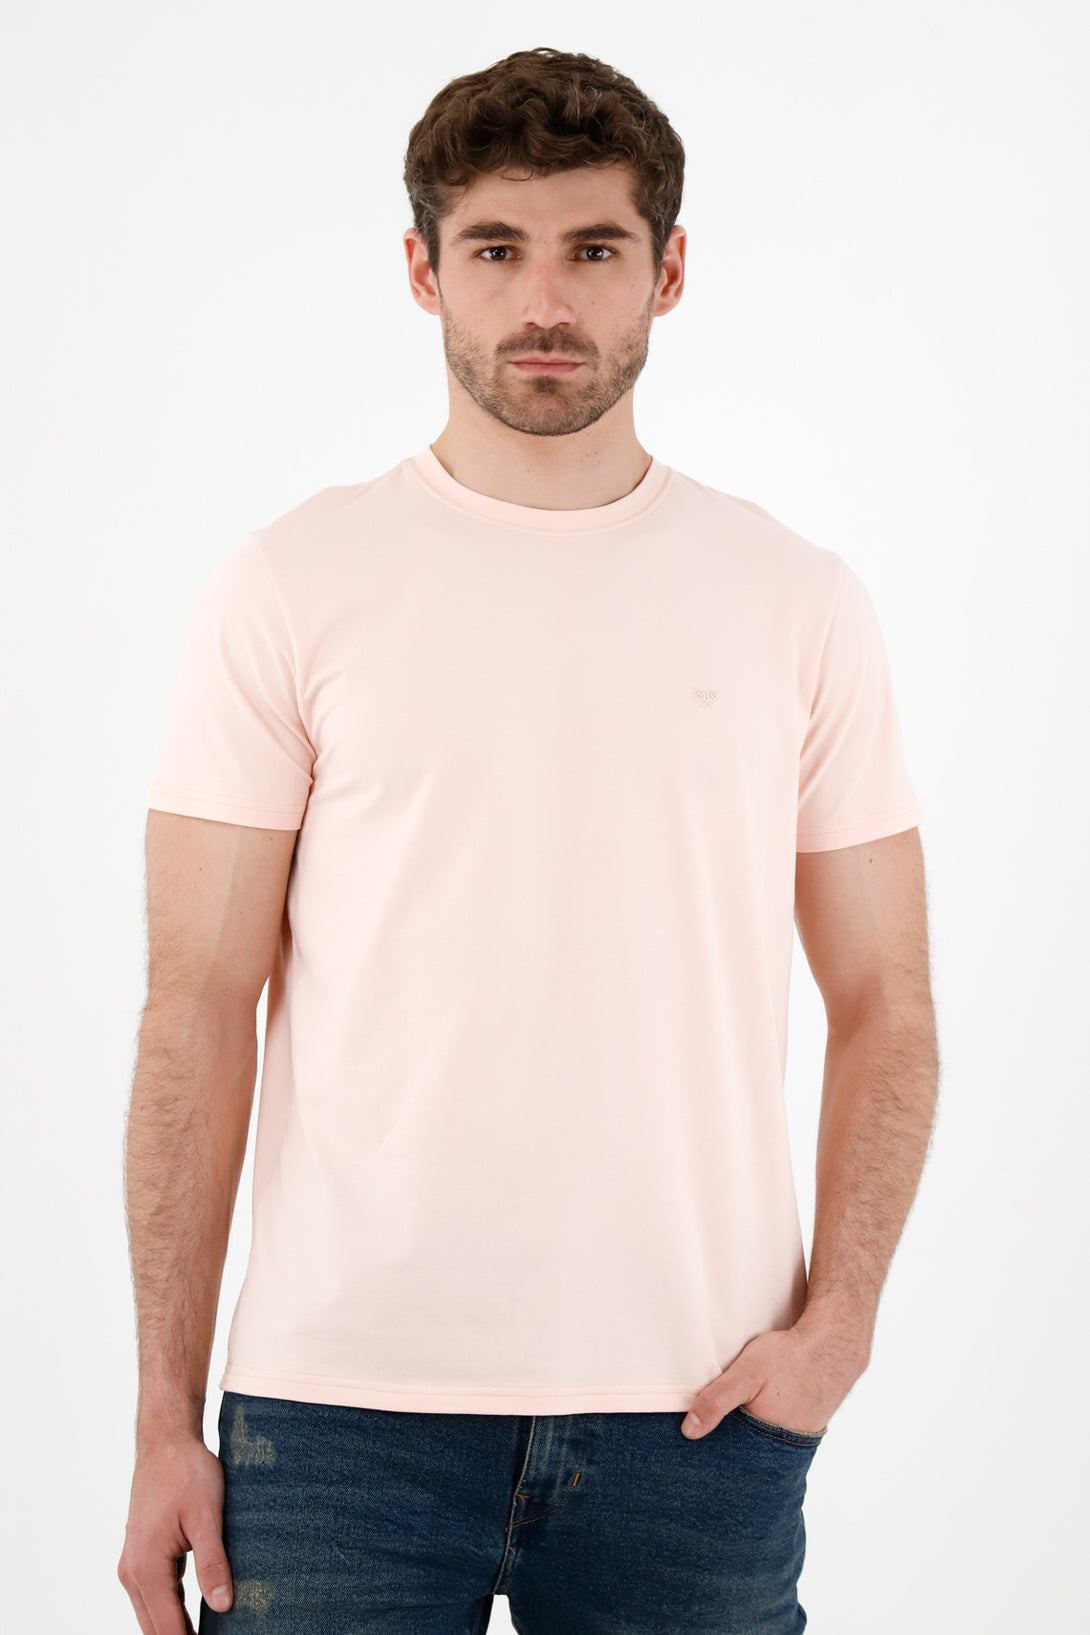 Men's tennis t-shirt, whole t-shirt